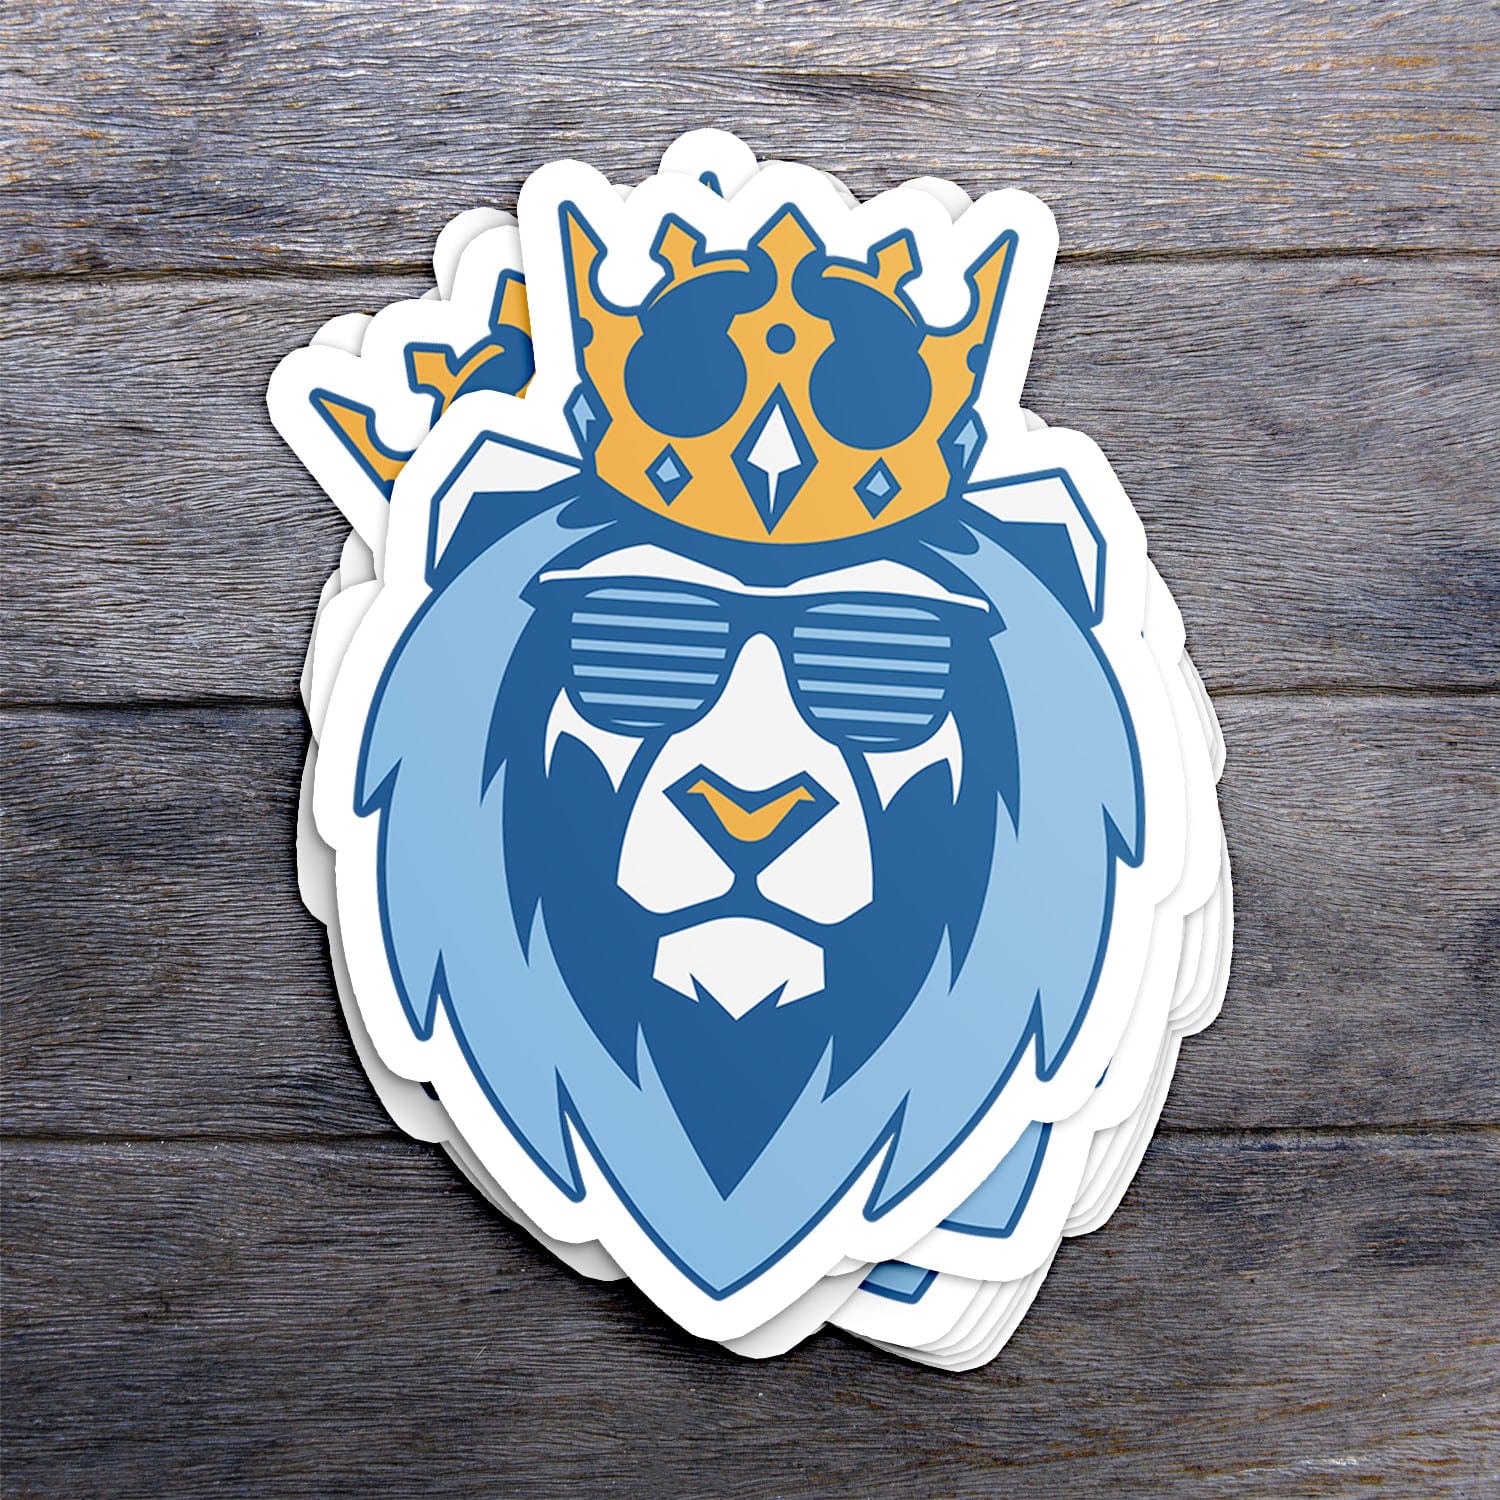 KC Swag Kansas City Royals blue, gold, powder blue SHADY LION vinyl die cut sticker stack on dark wood table